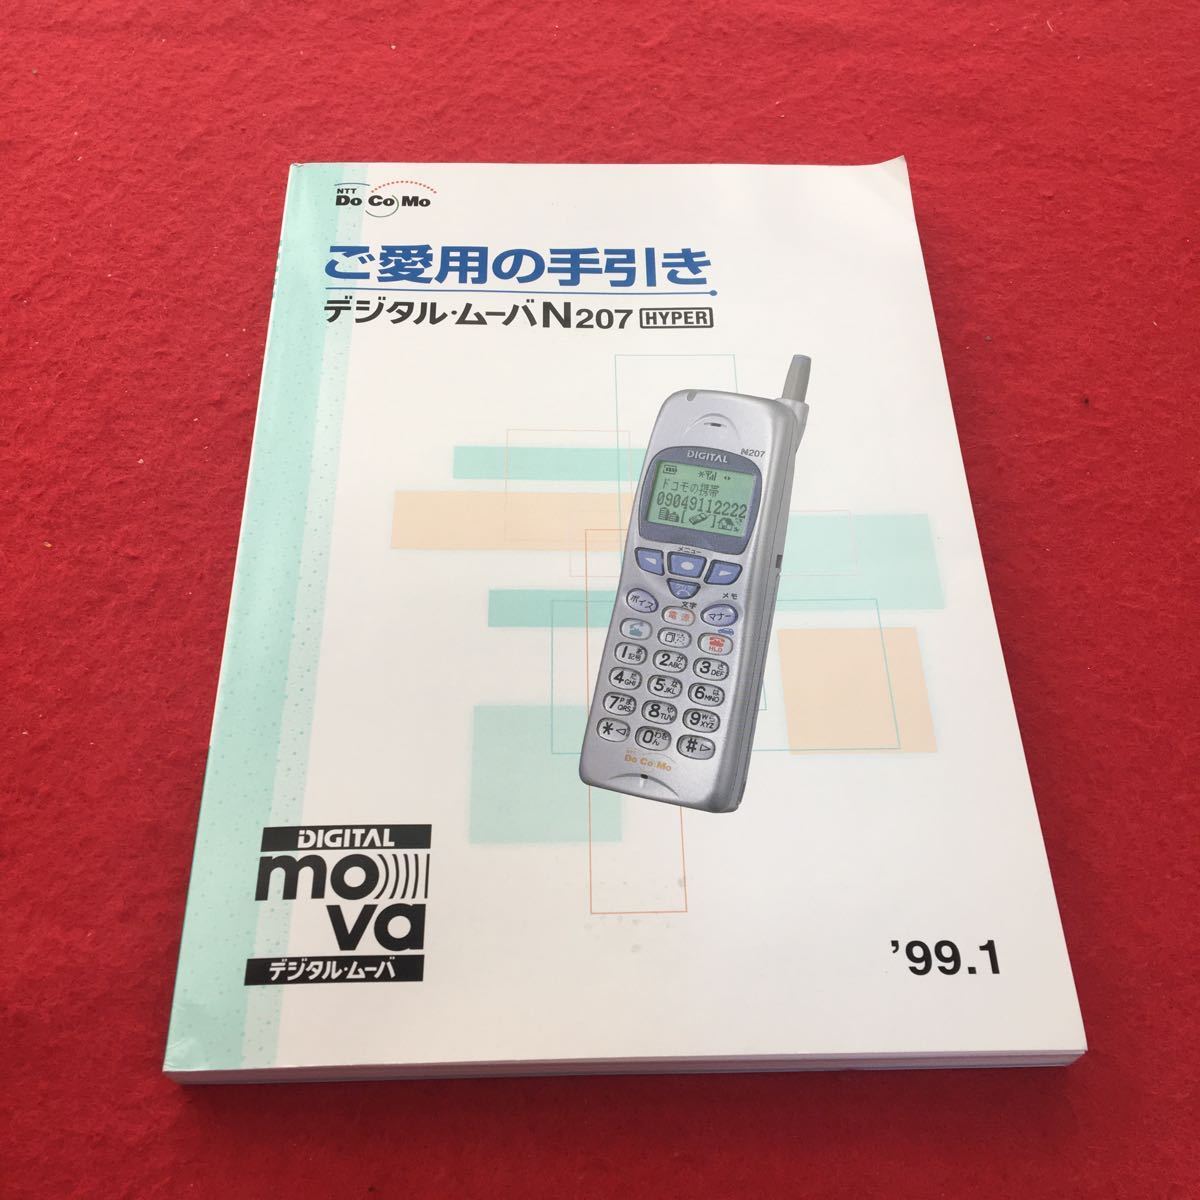 g-629*0 NTT DoCoMo digital m- bar N207 HYPER habitual use. hand discount 1999.1